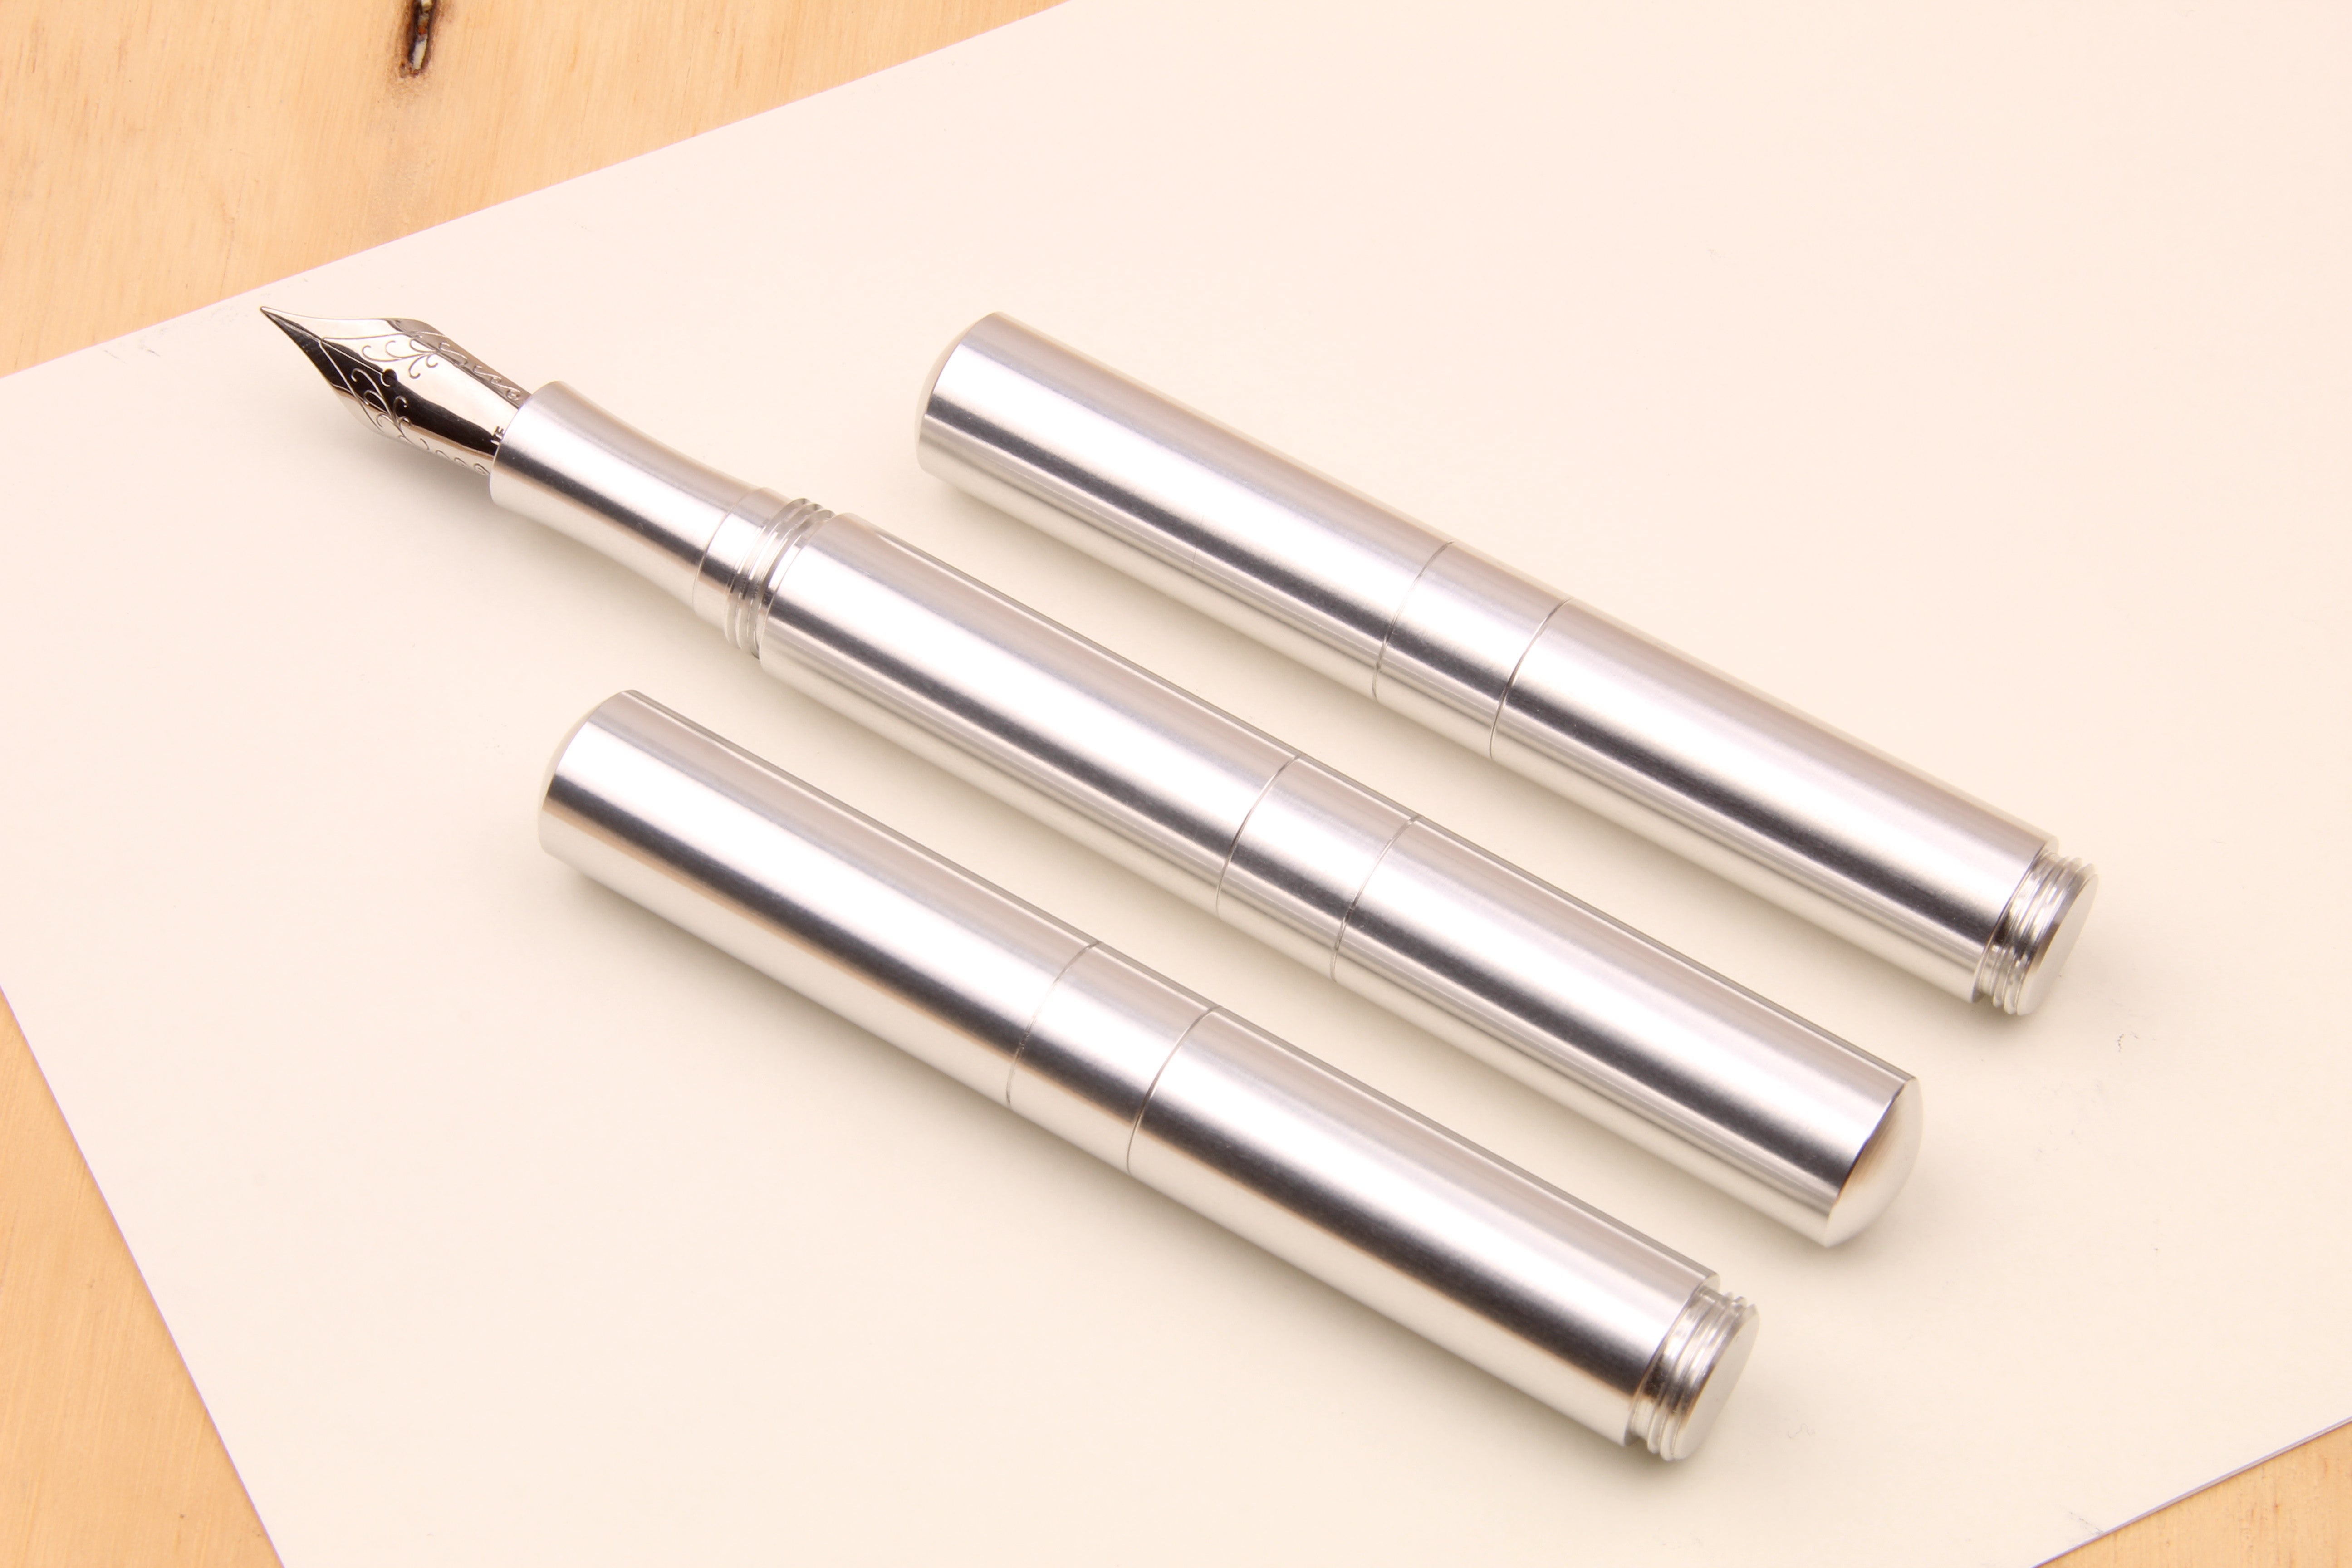 Anodized Aluminum "Pocket Six" Fountain Pen